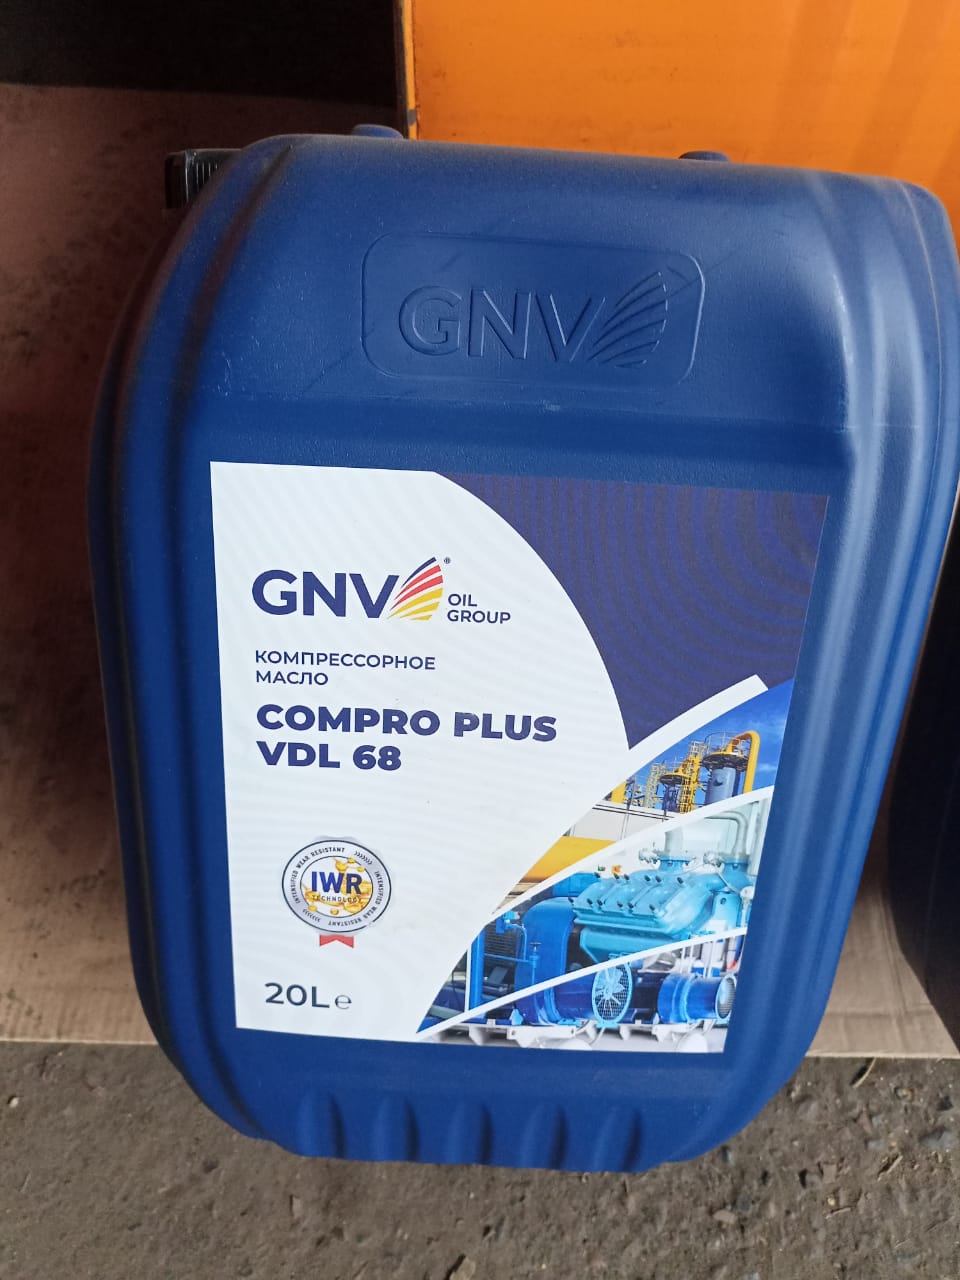 GNV Compro plus VDL 68 Компрессорное масло  20 л.